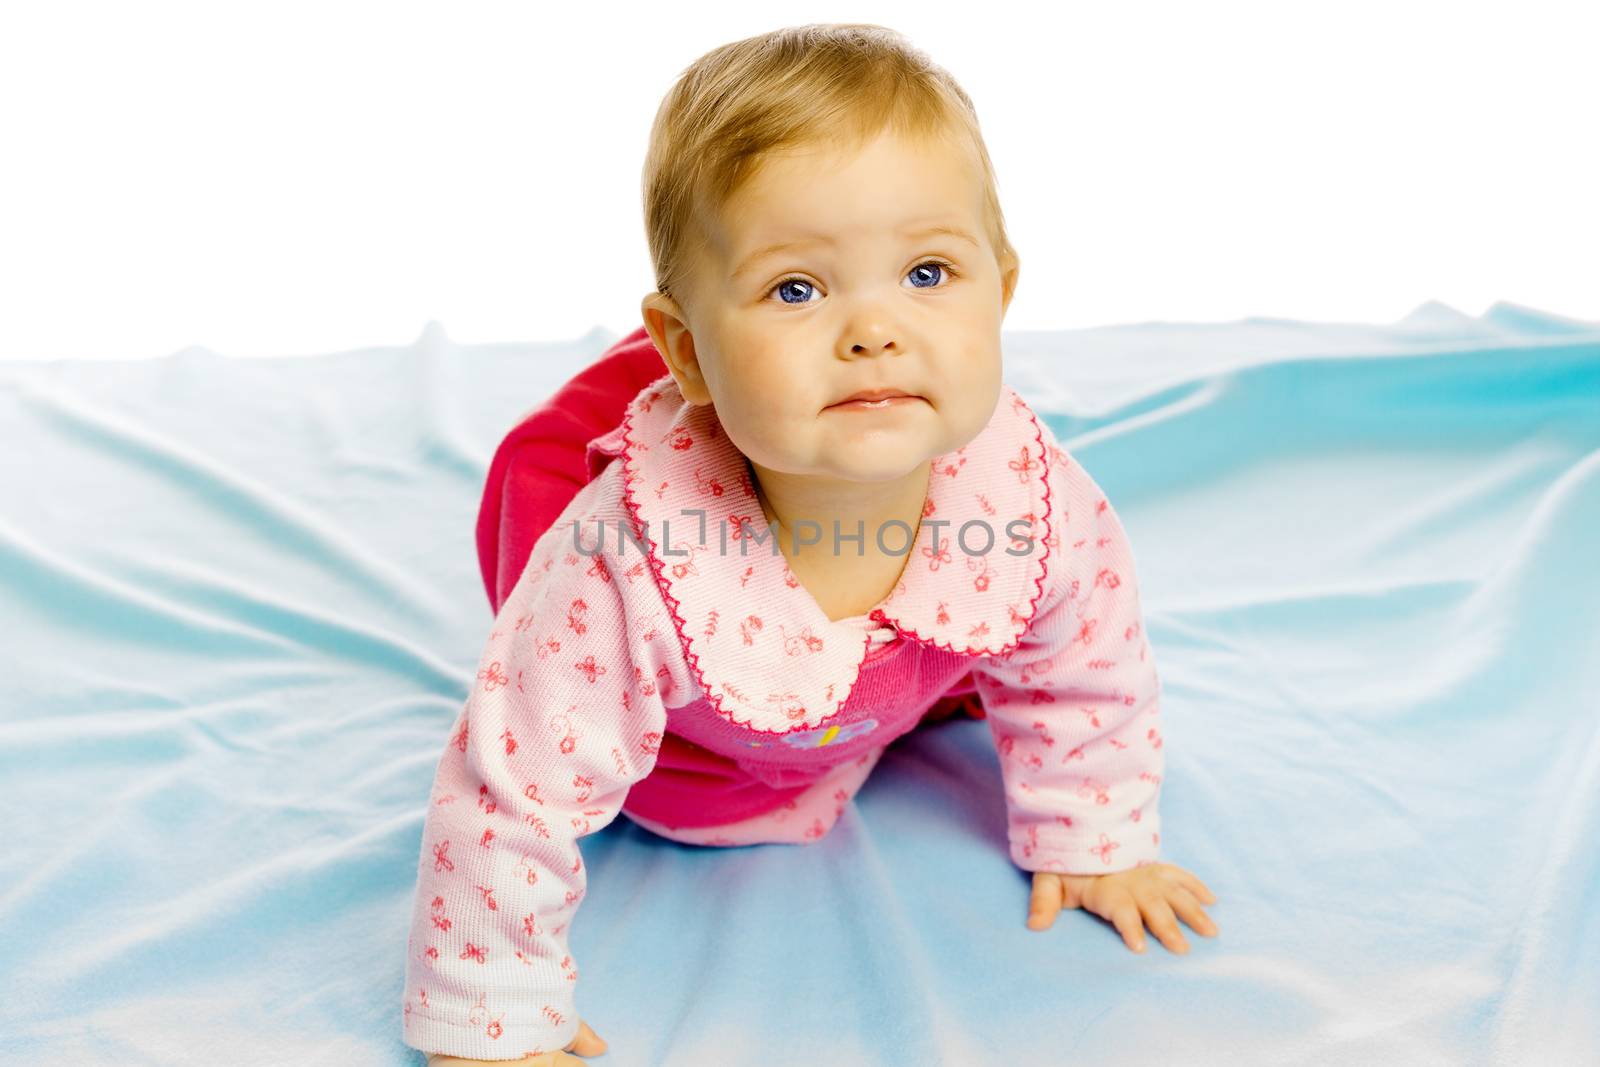 baby girl in a dress crawling by pzRomashka